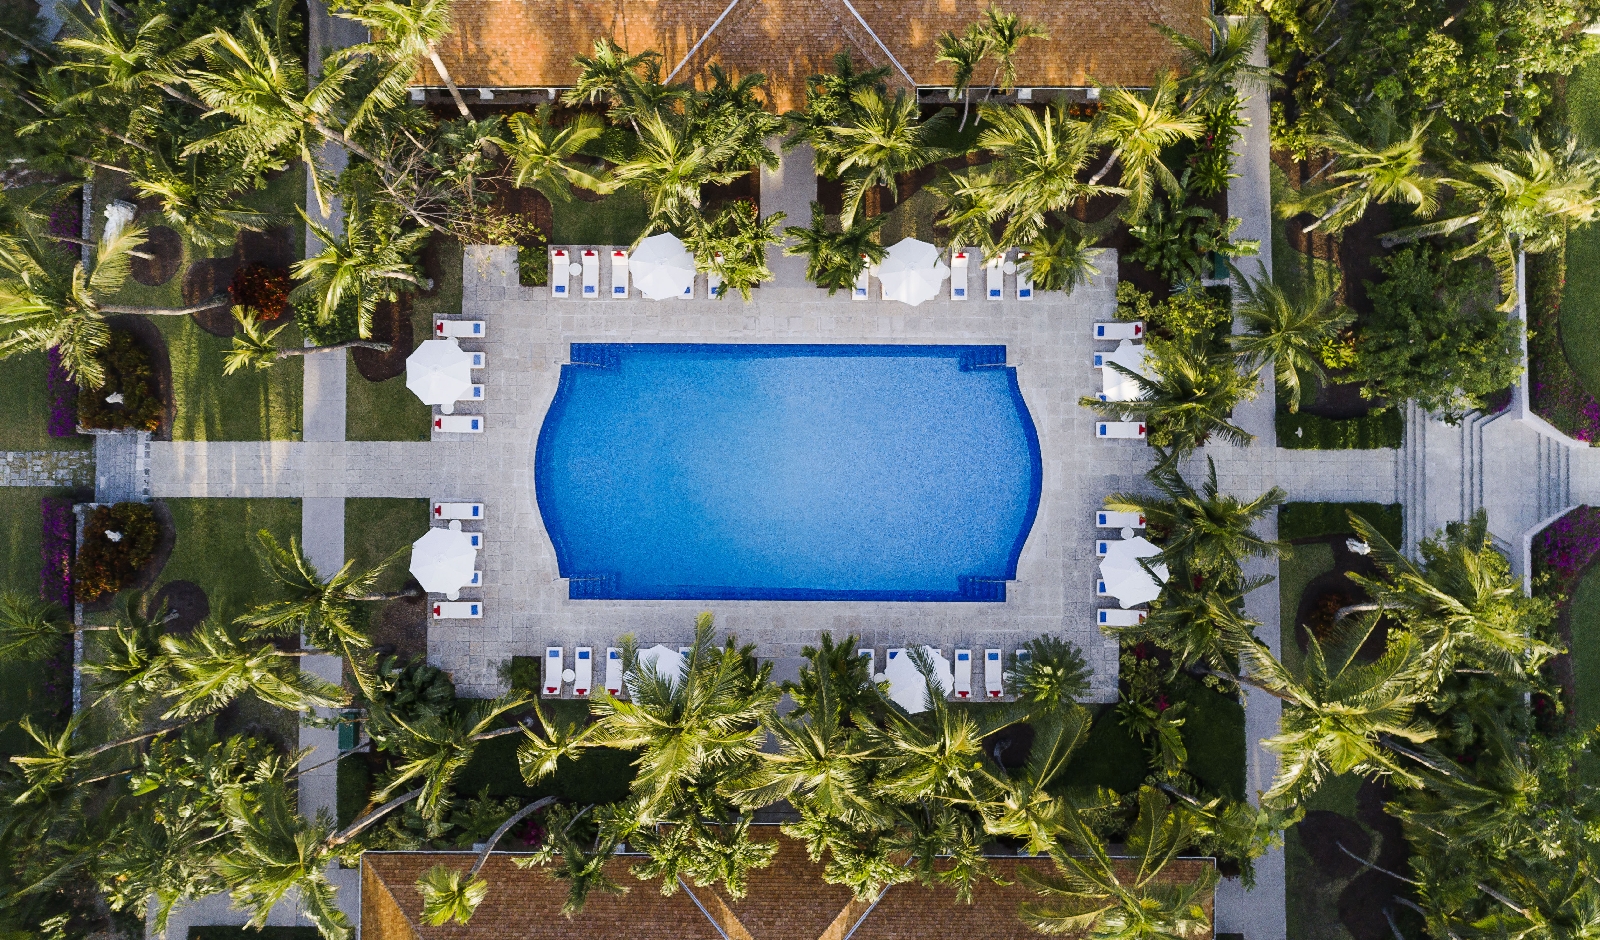 Aeria of the swimming pool at Four Seasons Ocean Club, Bahamas